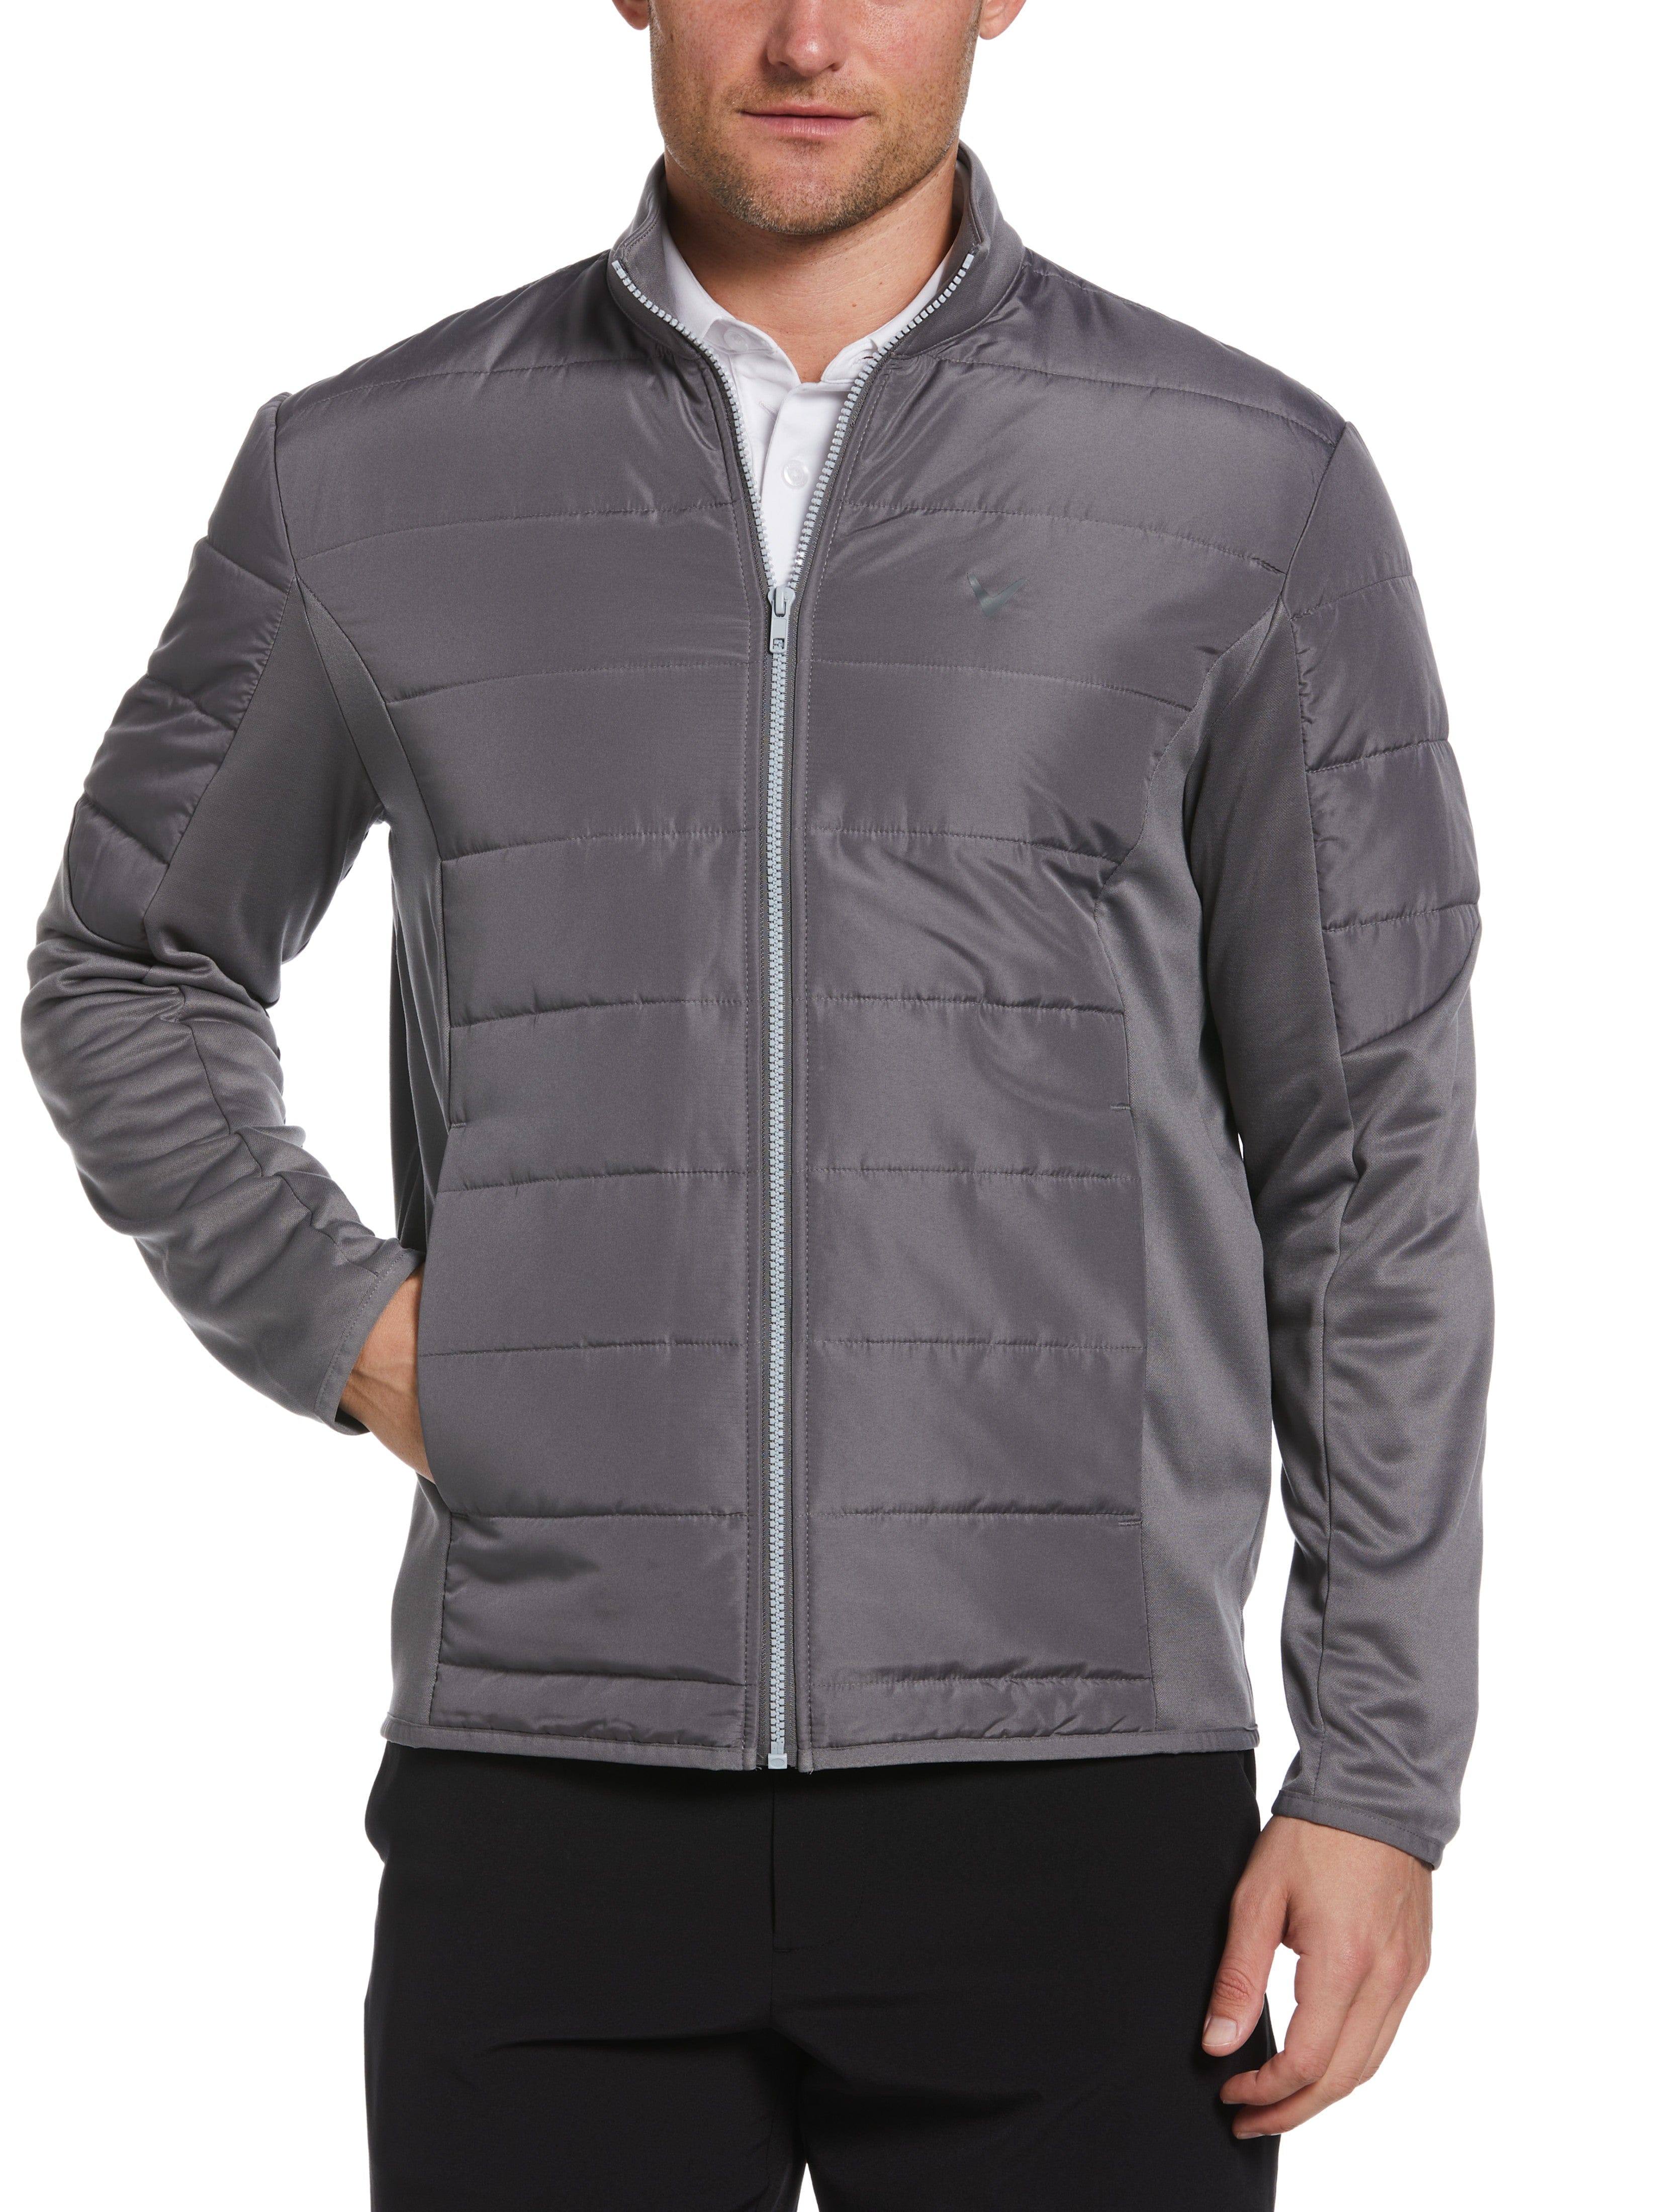 Callaway Apparel Mens Hybrid Performance Puffer Jacket Top, Size Medium, Quiet Shade Gray, 100% Polyester | Golf Apparel Shop